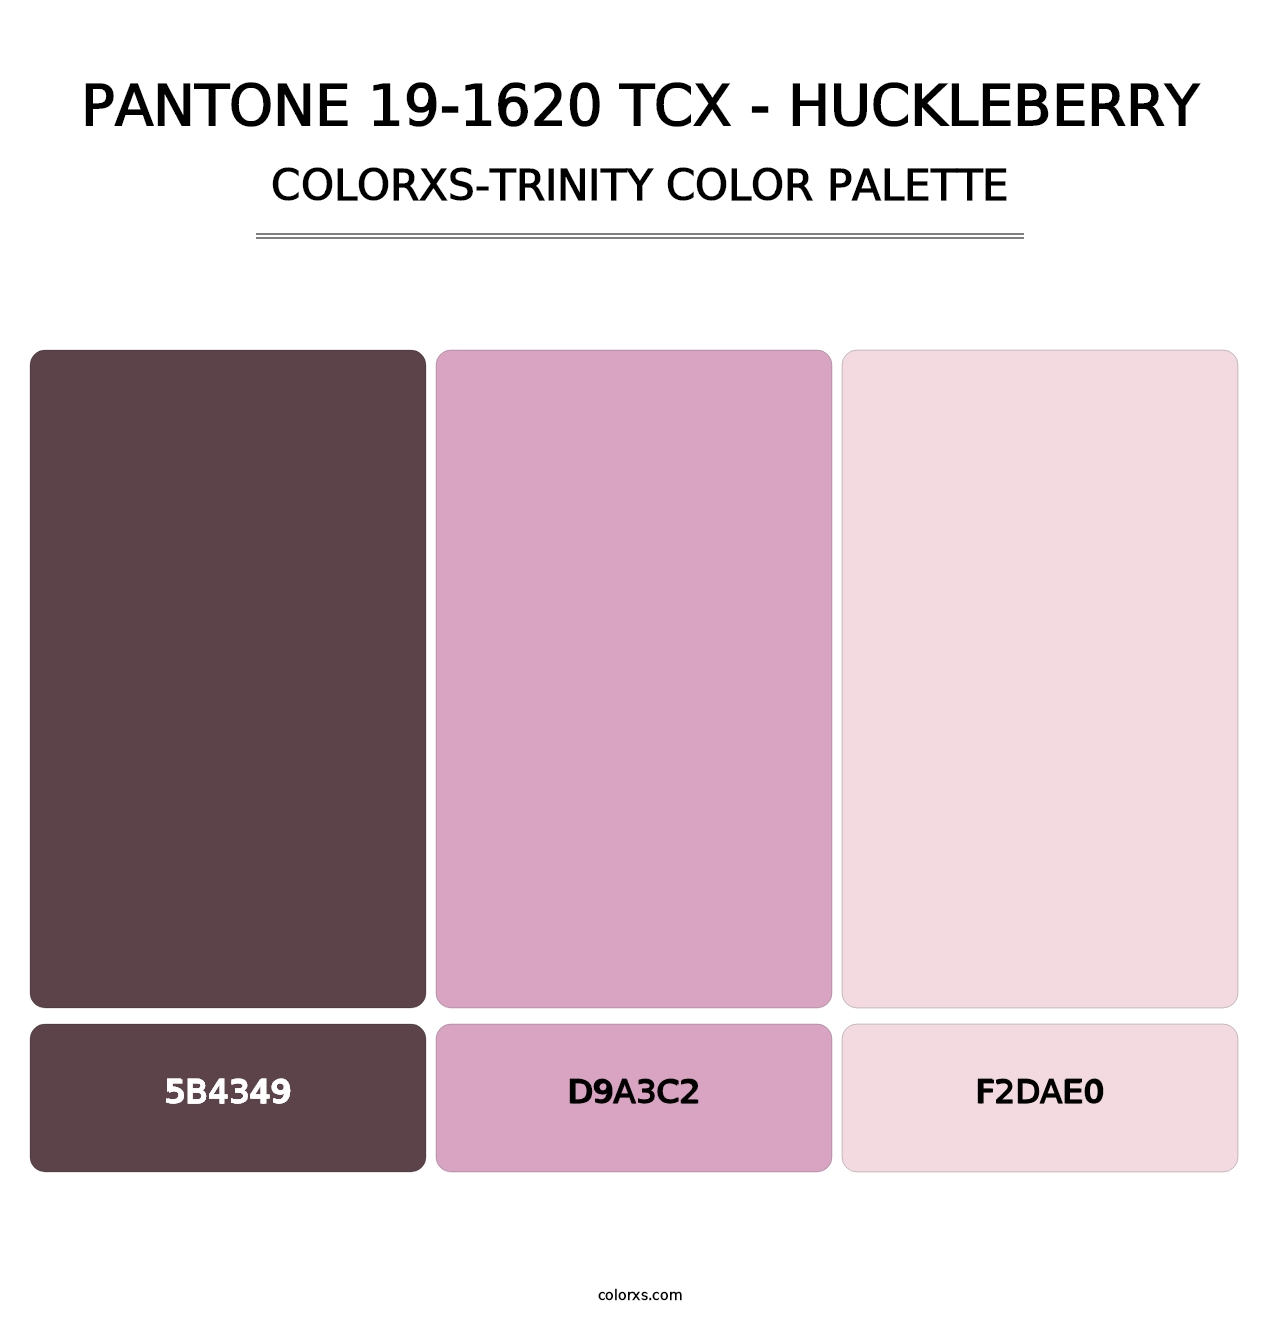 PANTONE 19-1620 TCX - Huckleberry - Colorxs Trinity Palette